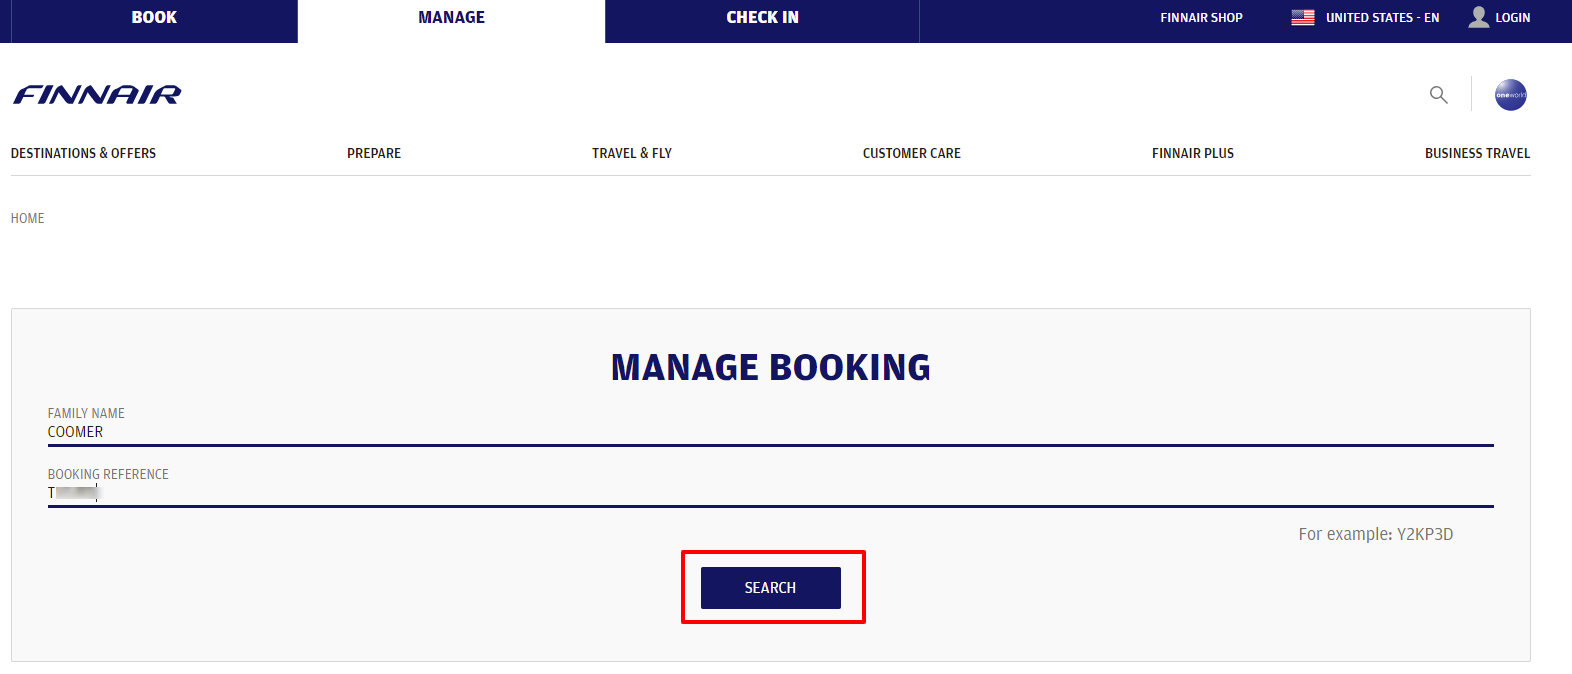 Add AAdvantage Number to British Airways Avios Booking